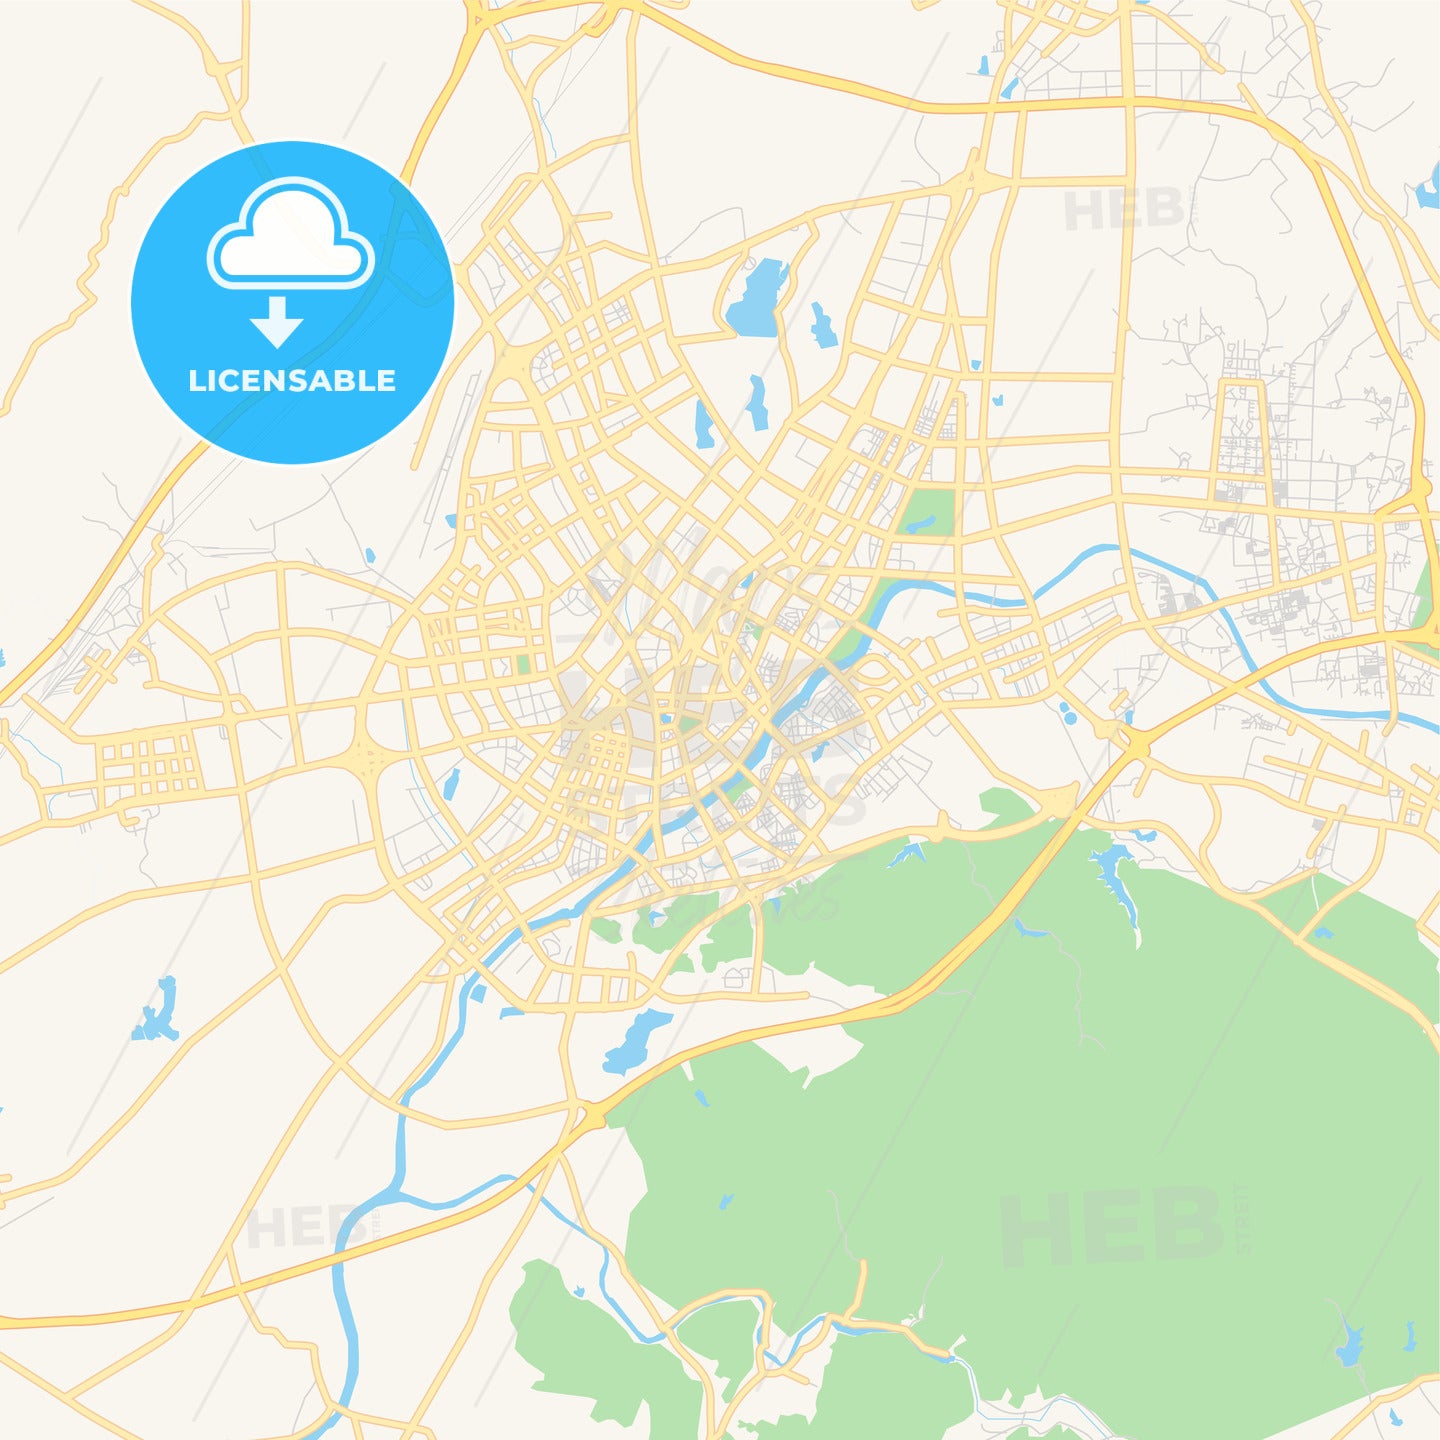 Printable street map of Yiwu, China